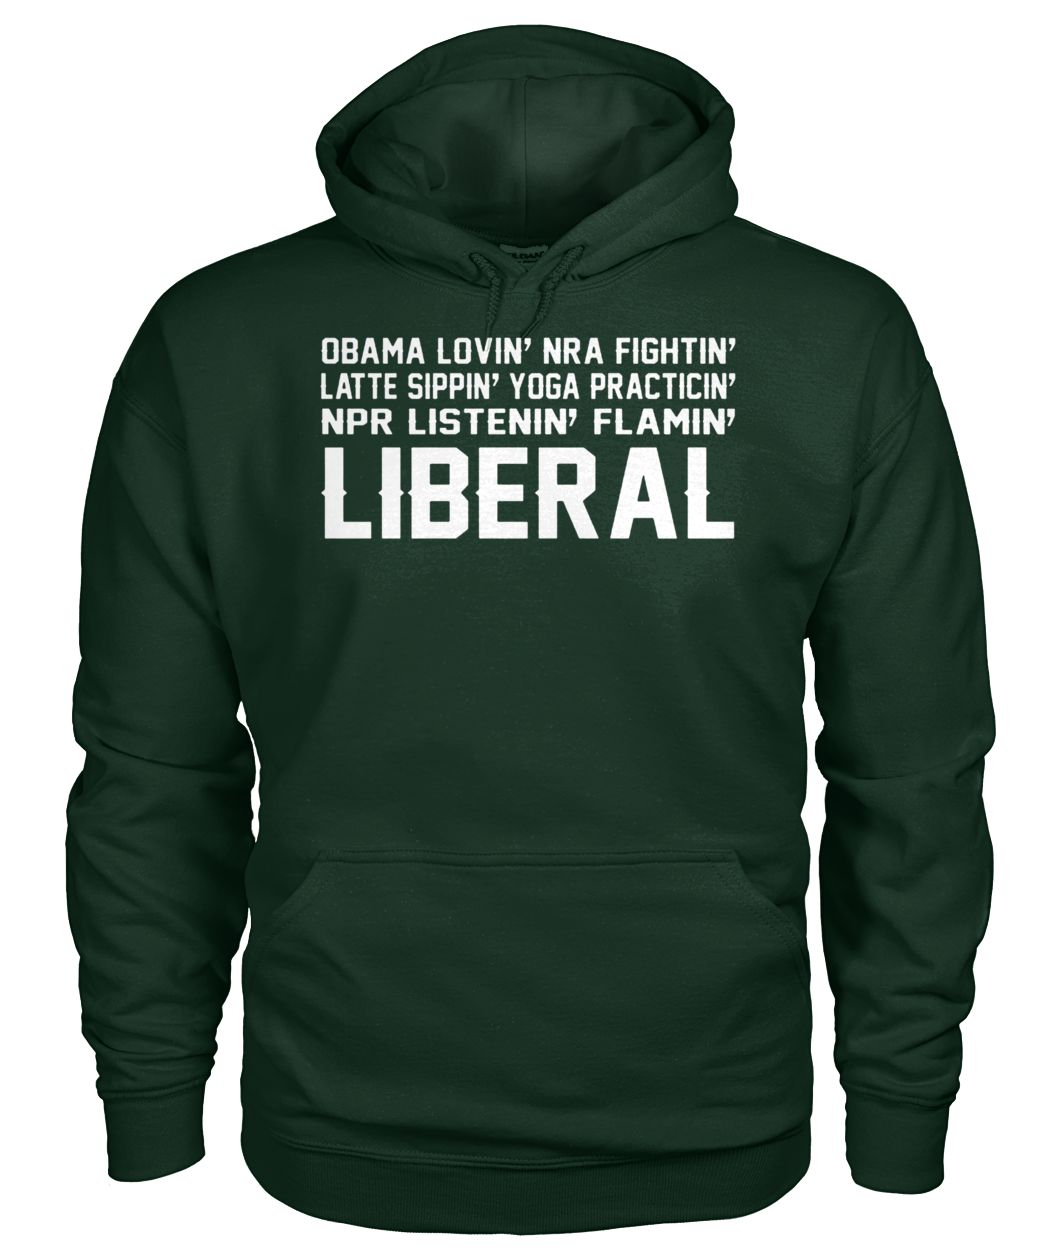 Obama loving fighting latte sipping yoga practicing liberal gildan hoodie